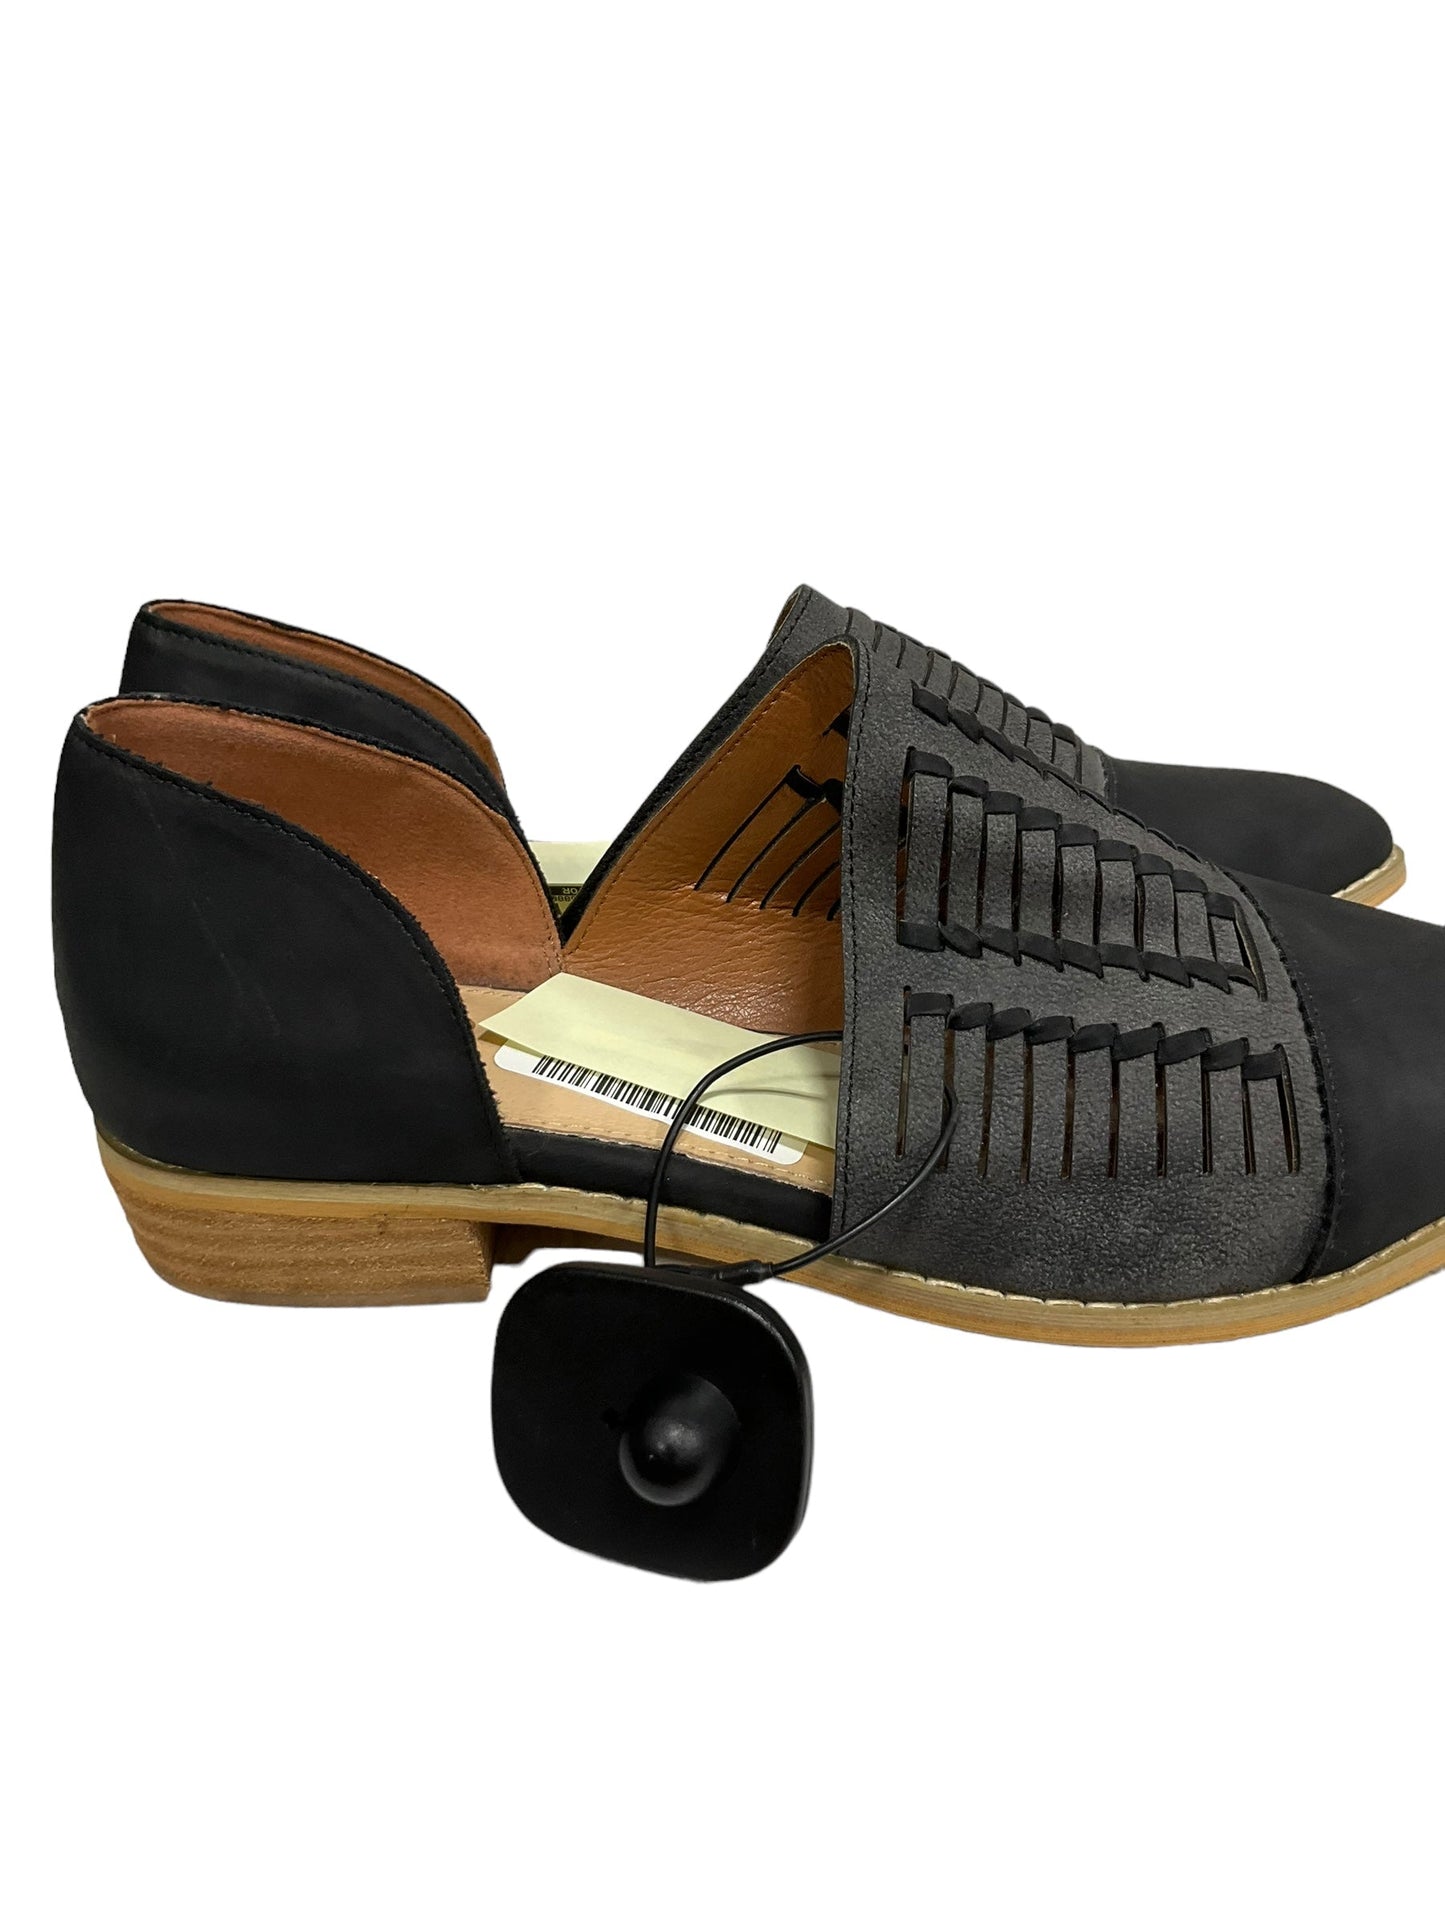 Black & Grey Shoes Flats Clothes Mentor, Size 10